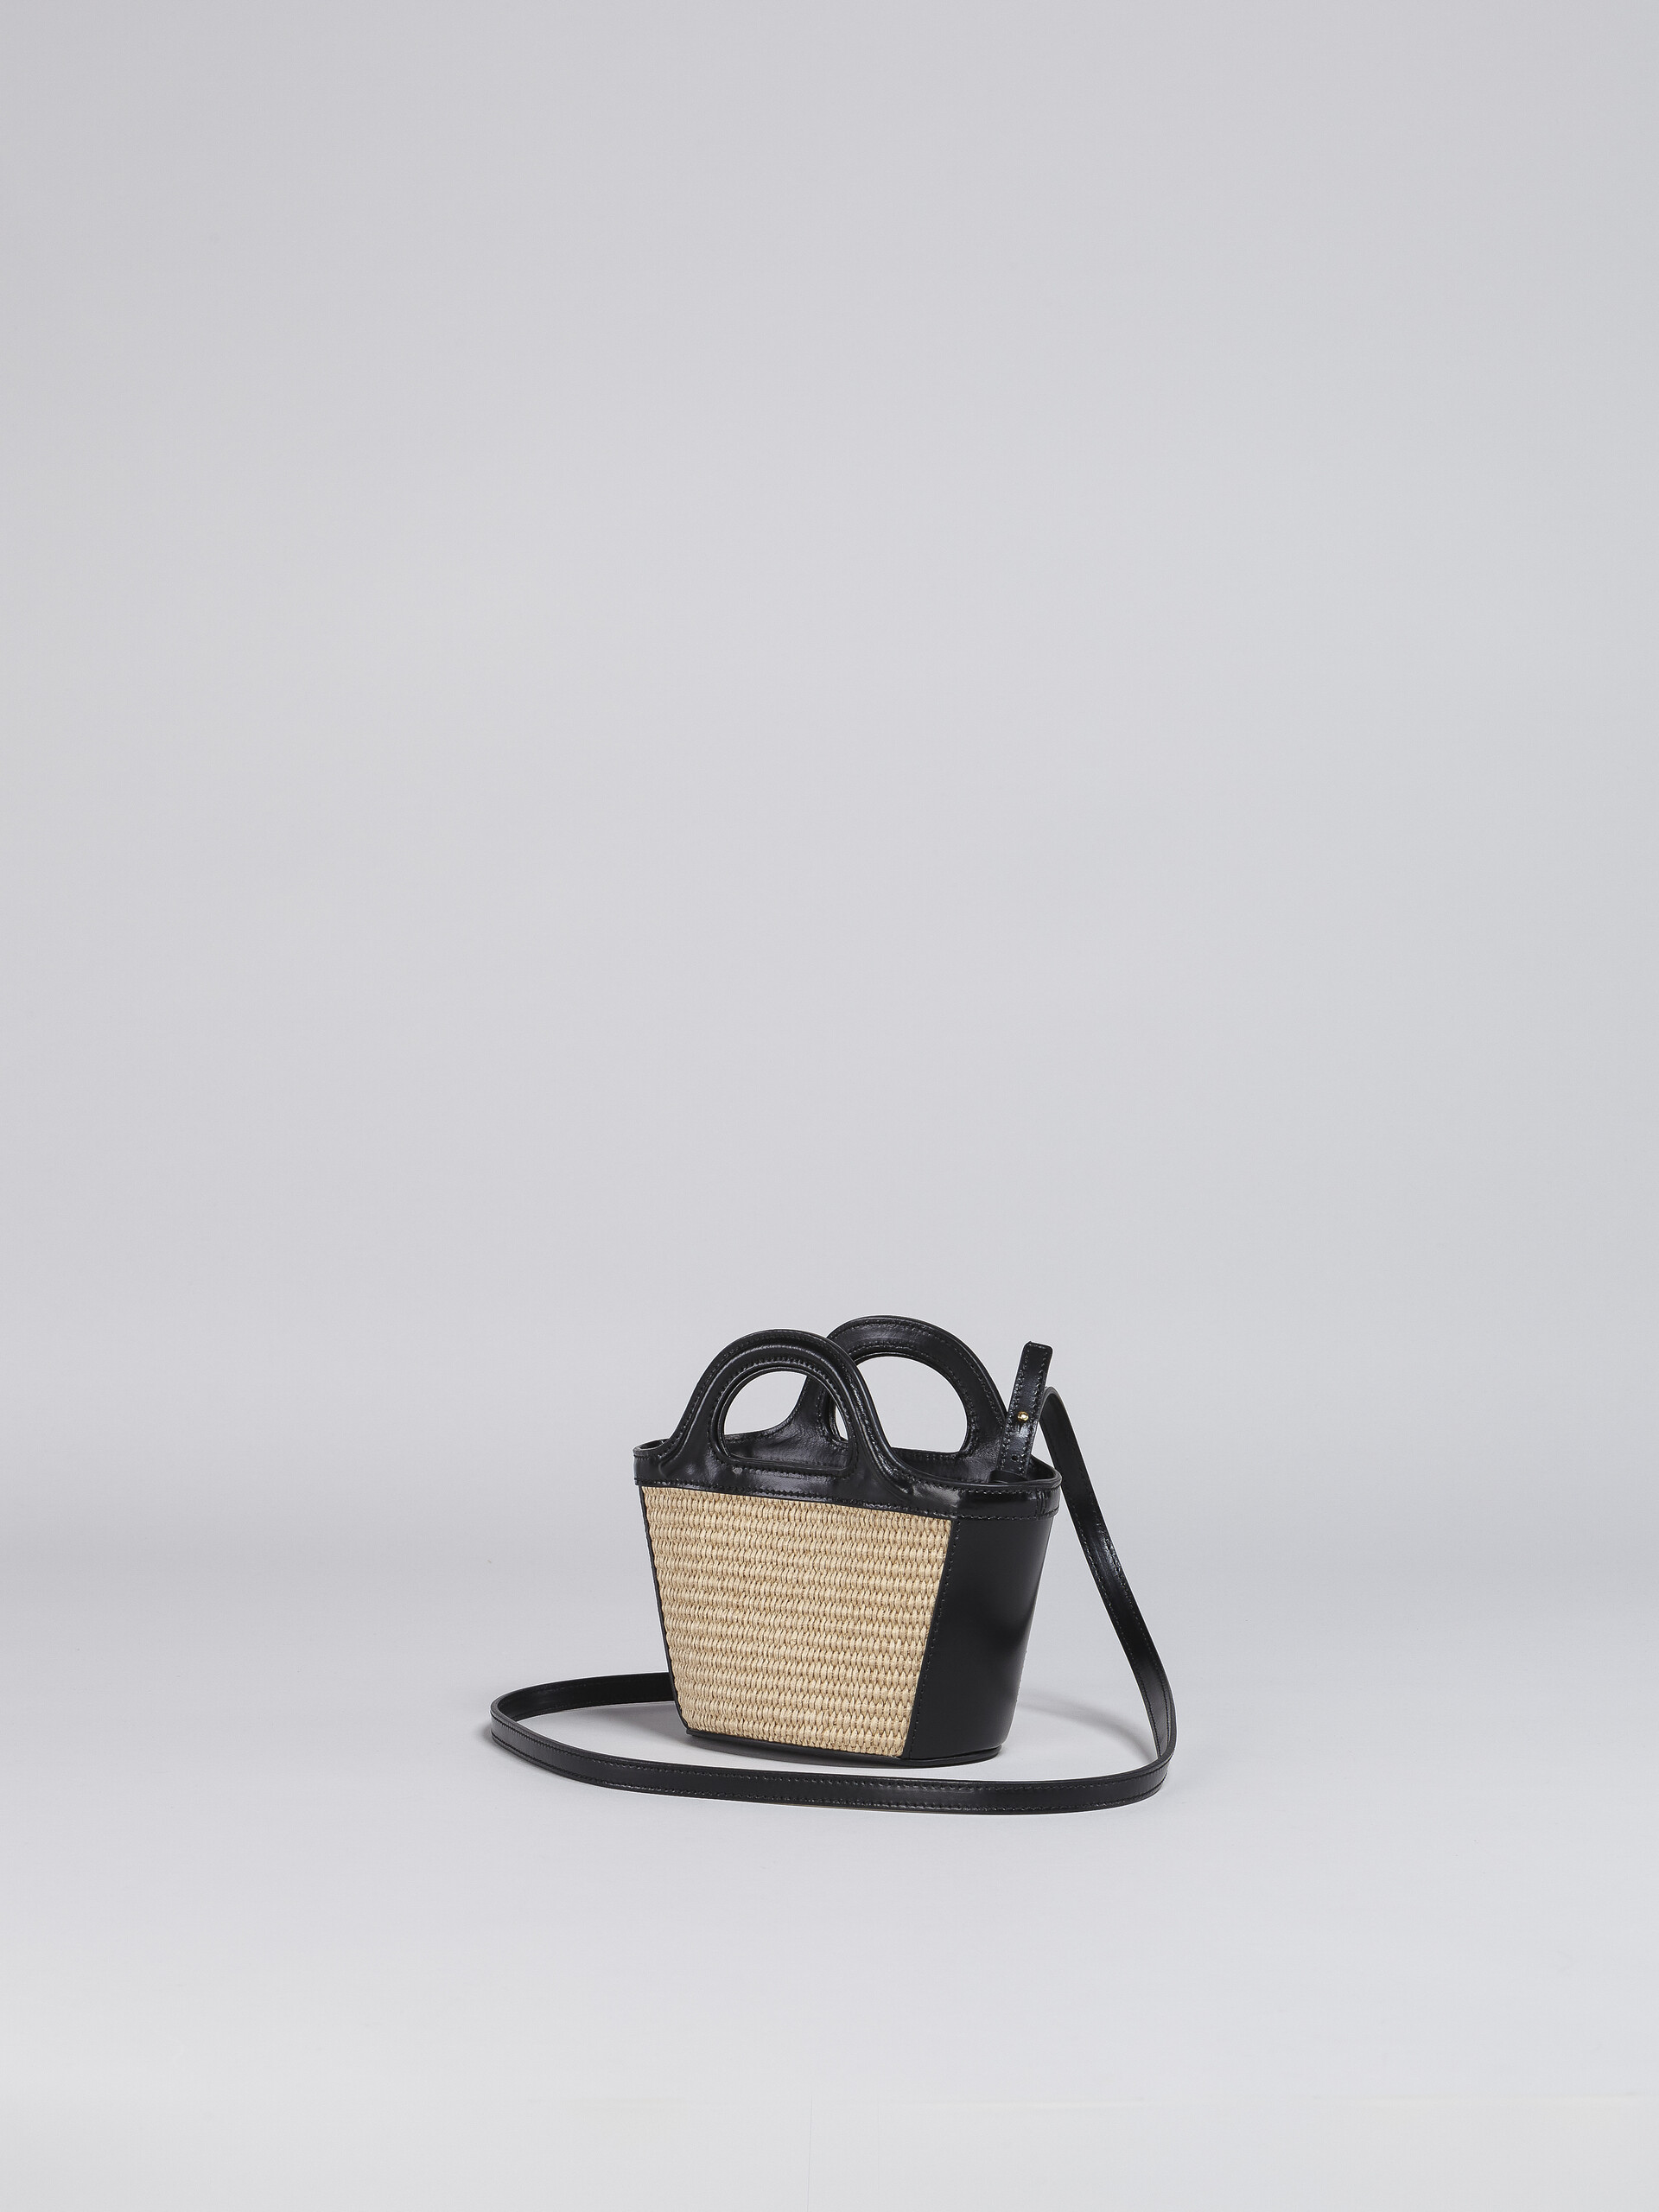 TROPICALIA micro bag in black leather and raffia - Handbags - Image 2